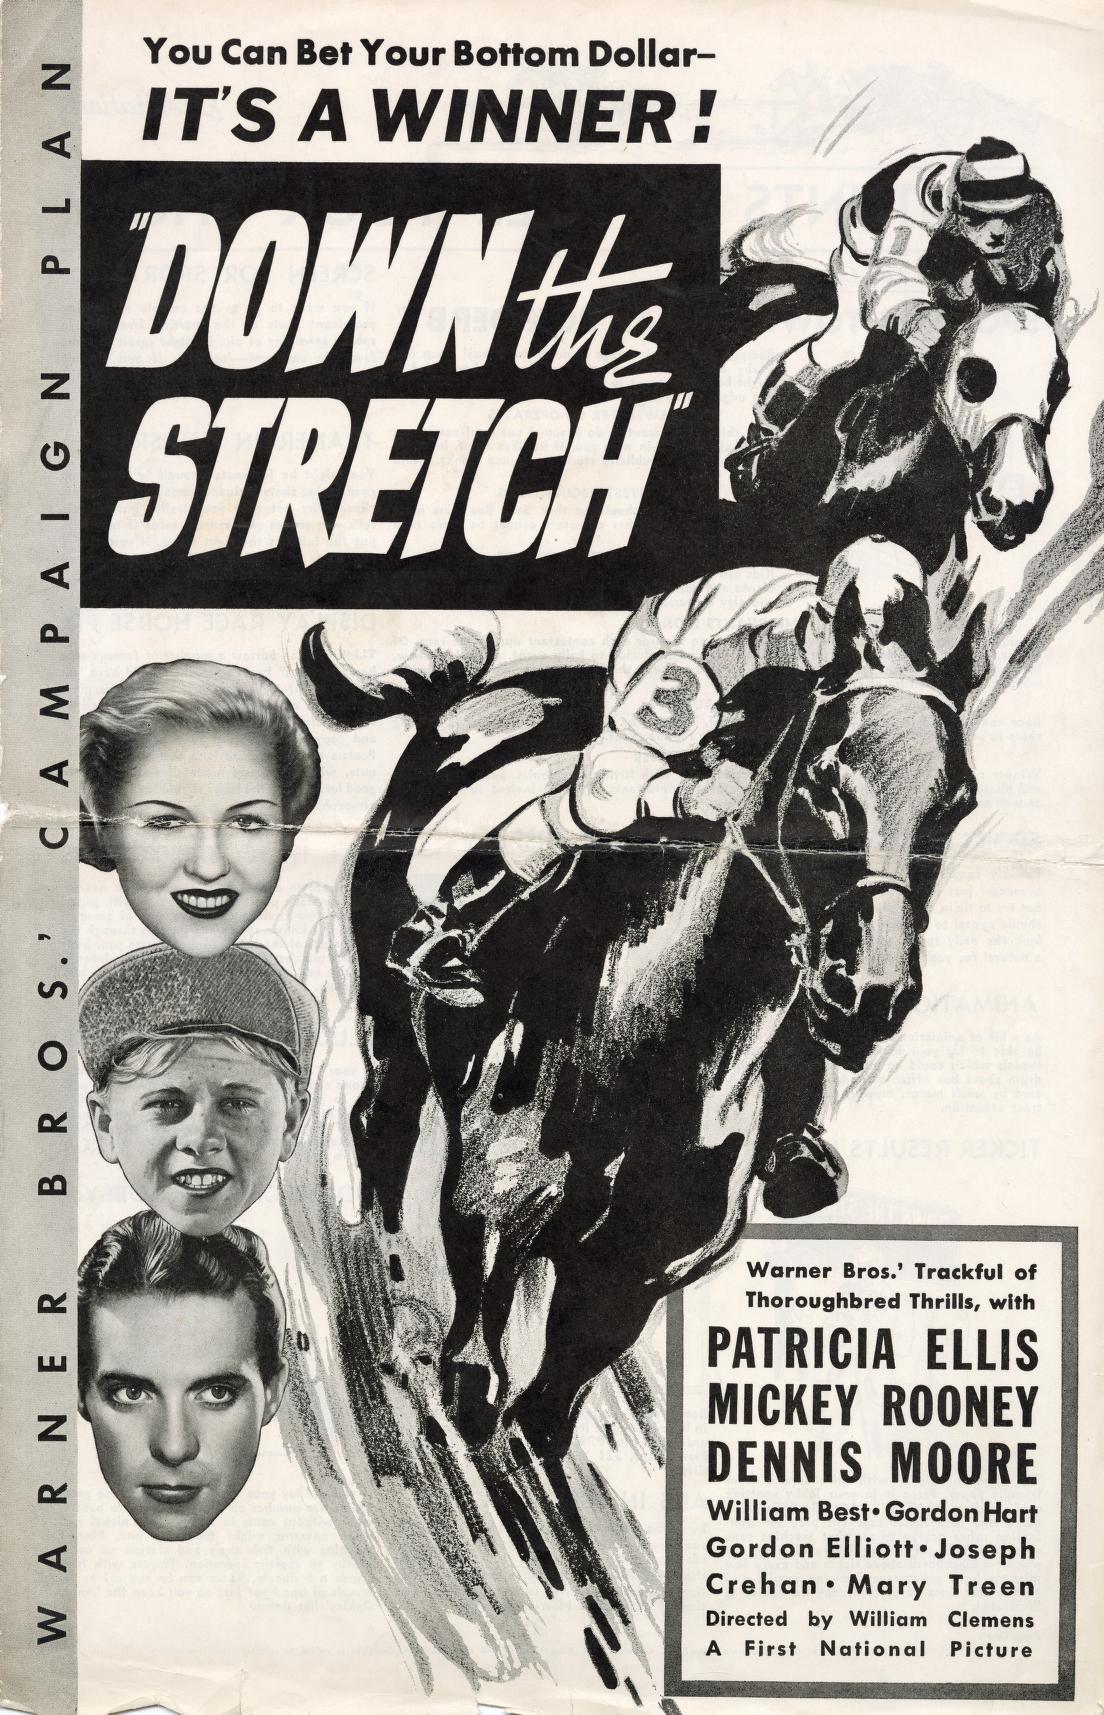 Down the Stretch (Warner Bros.)